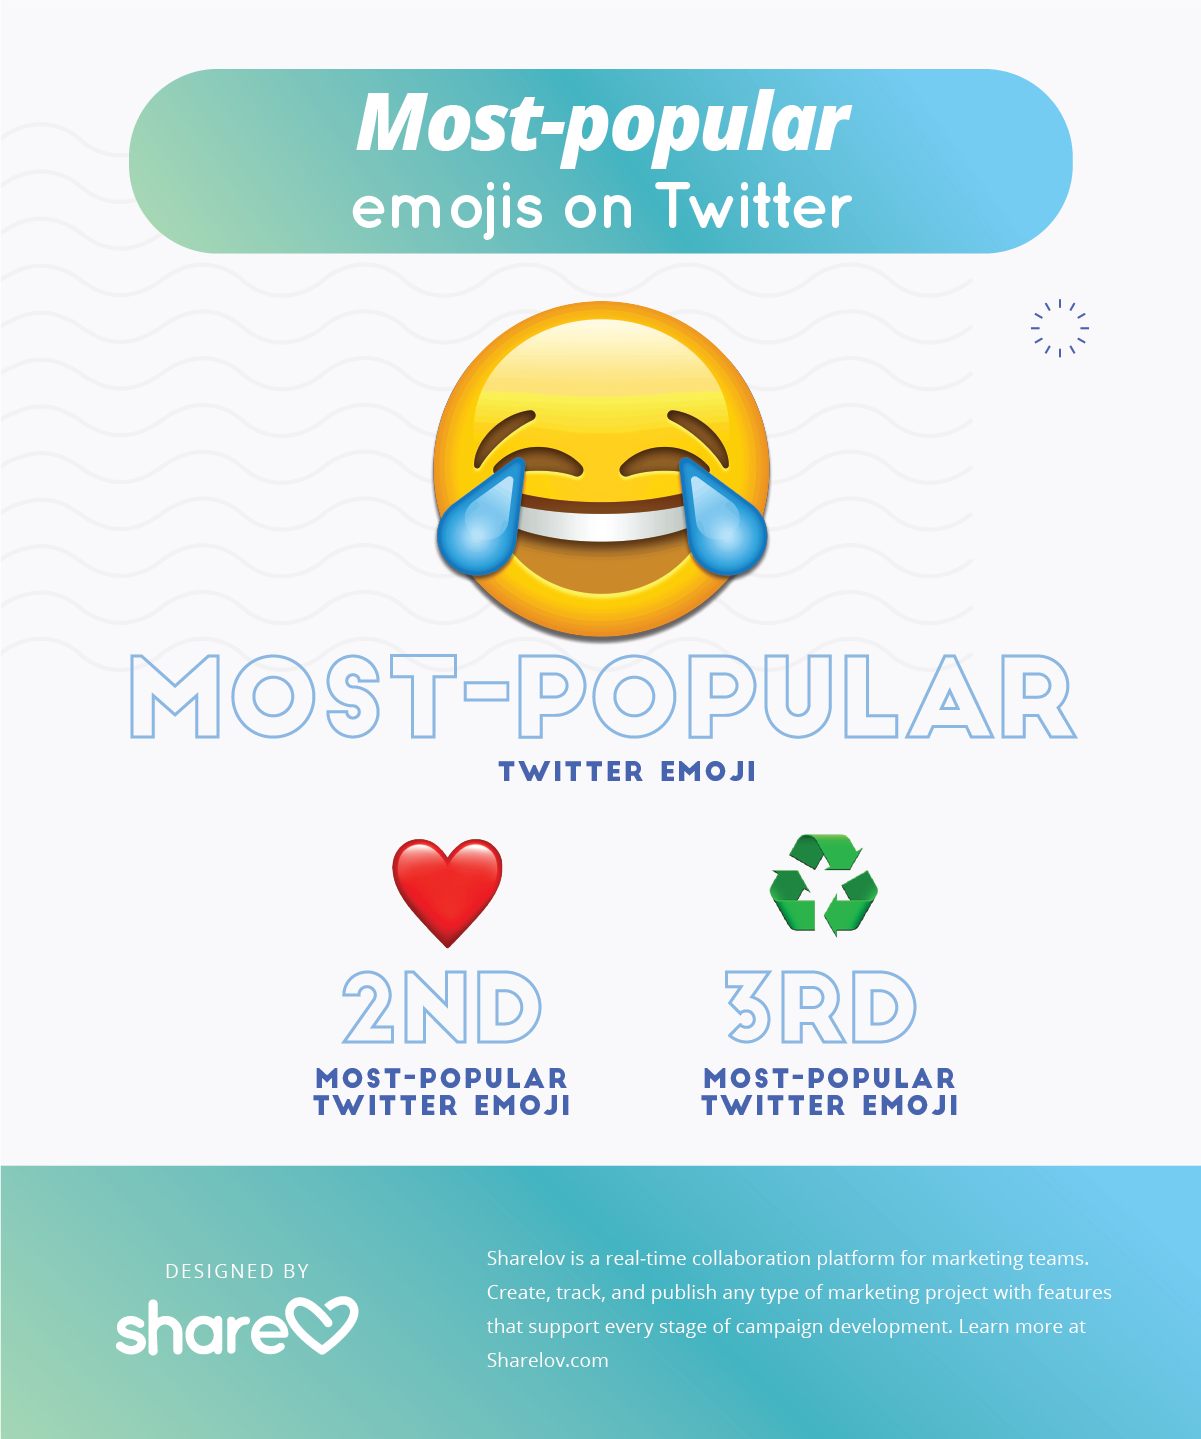 Most-popular emojis on Twitter